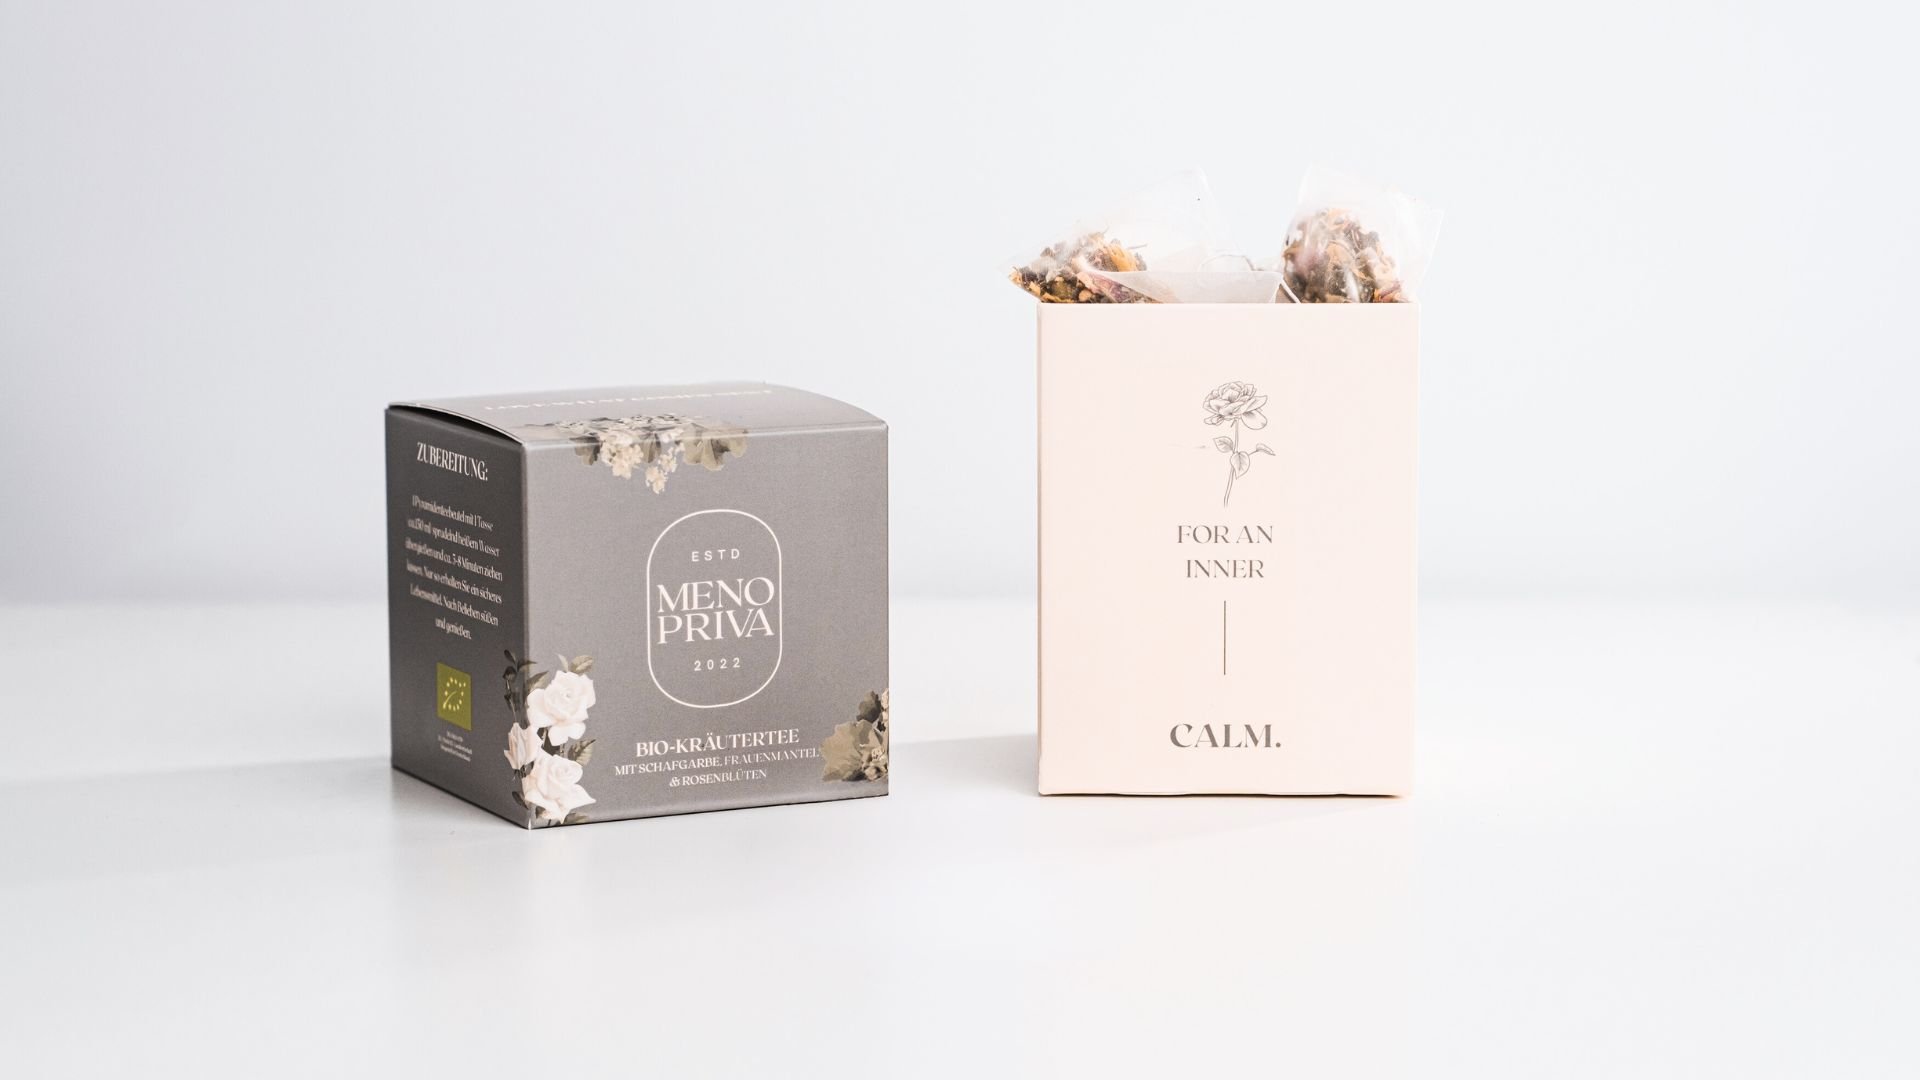 CALM. Organic herbal tea